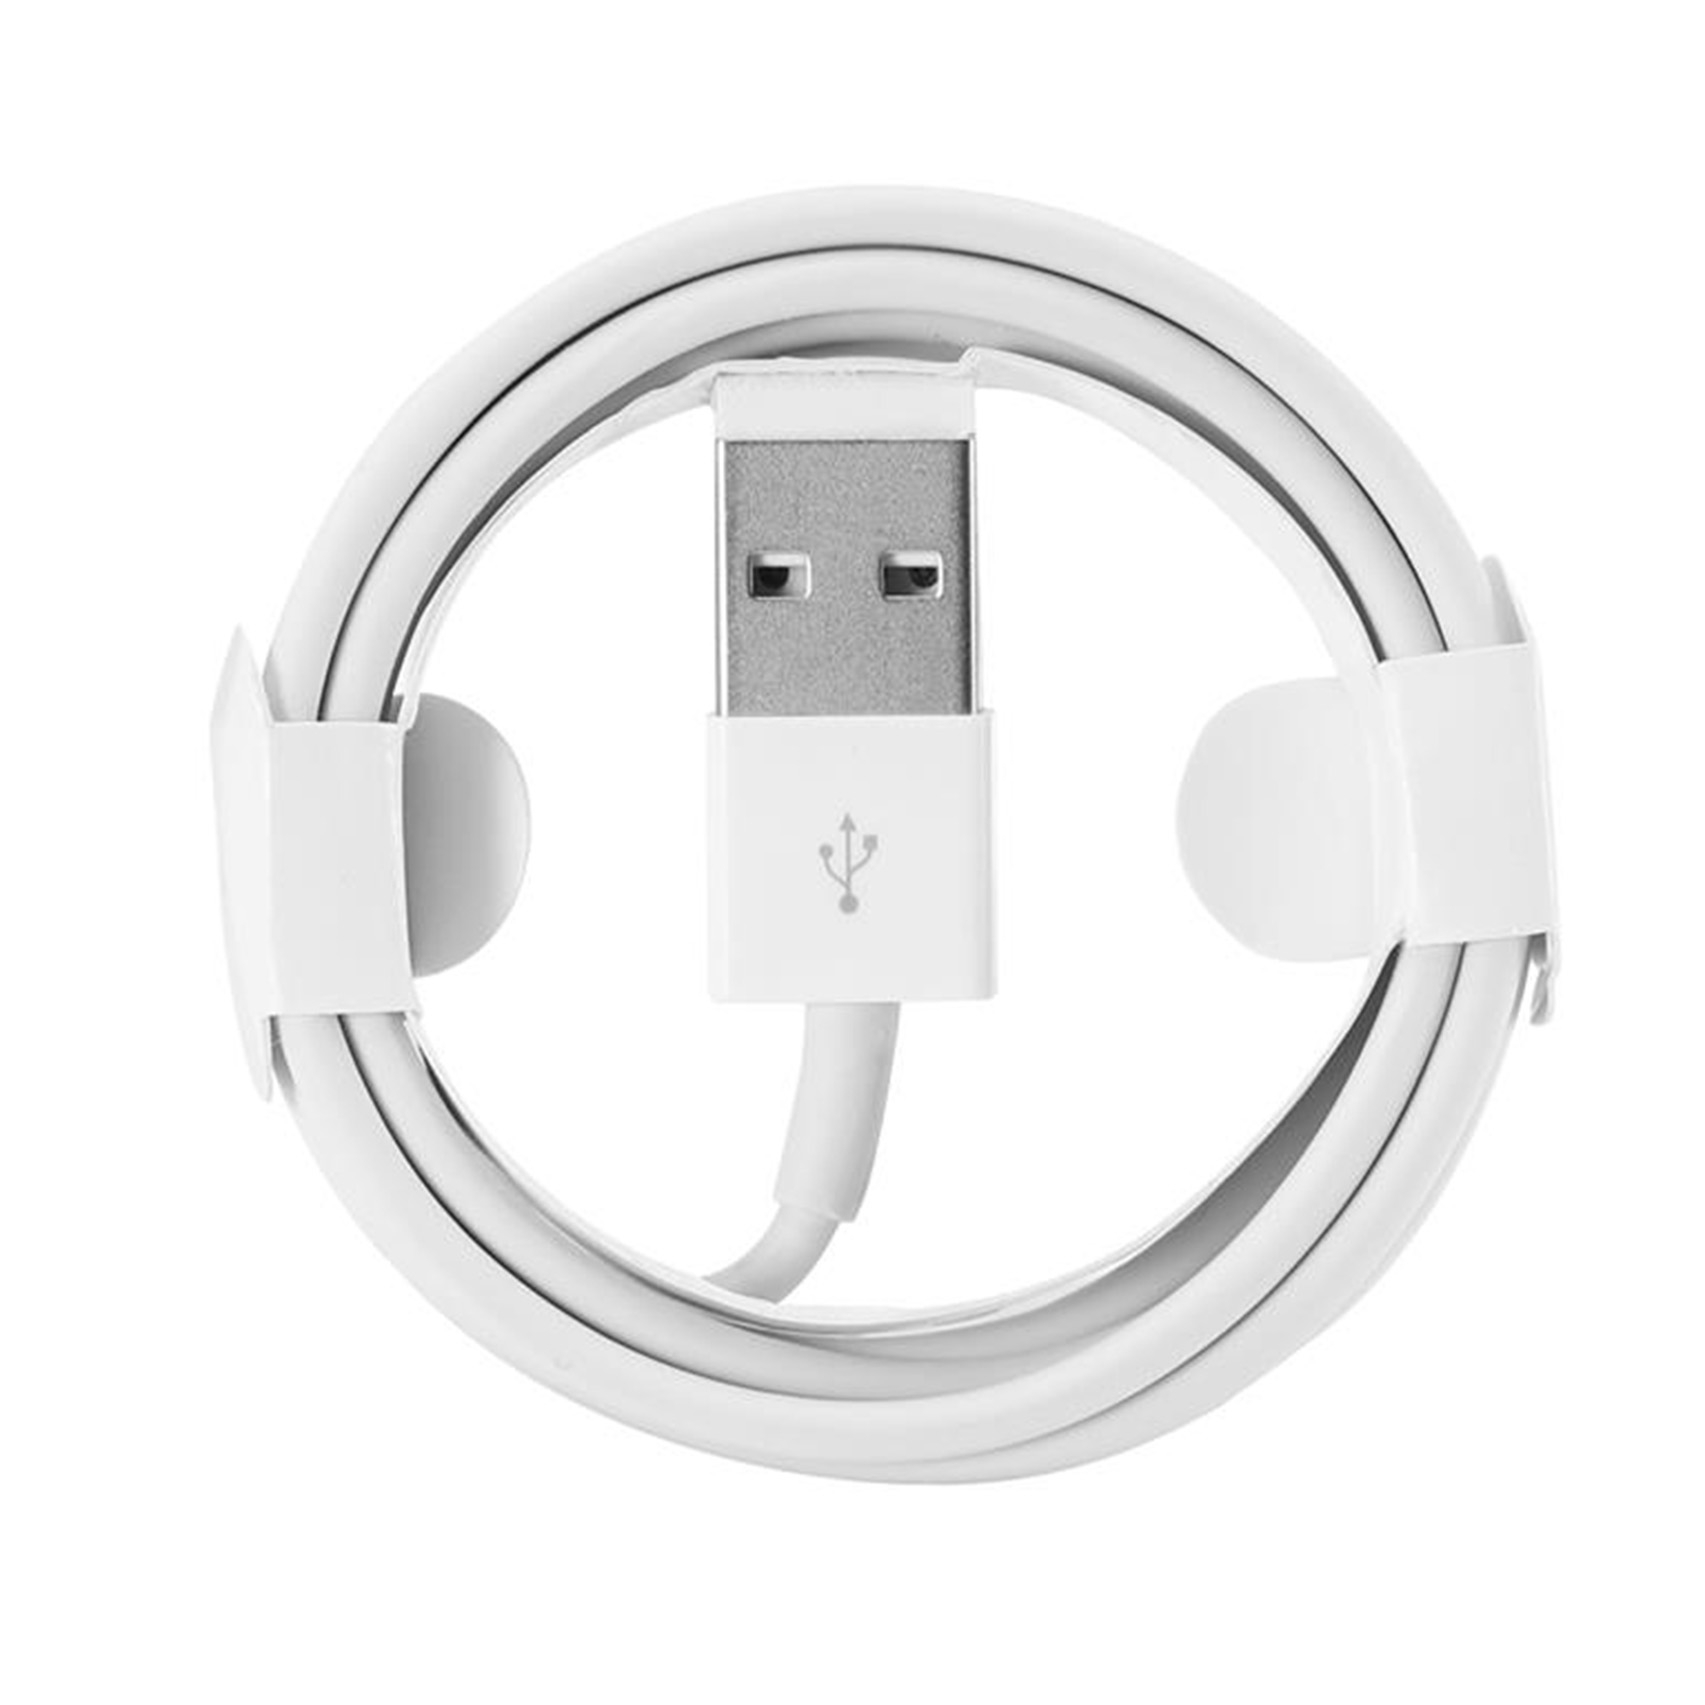 10x iPhone 7 Plus Lightning auf USB Kabel 1m Ladekabel